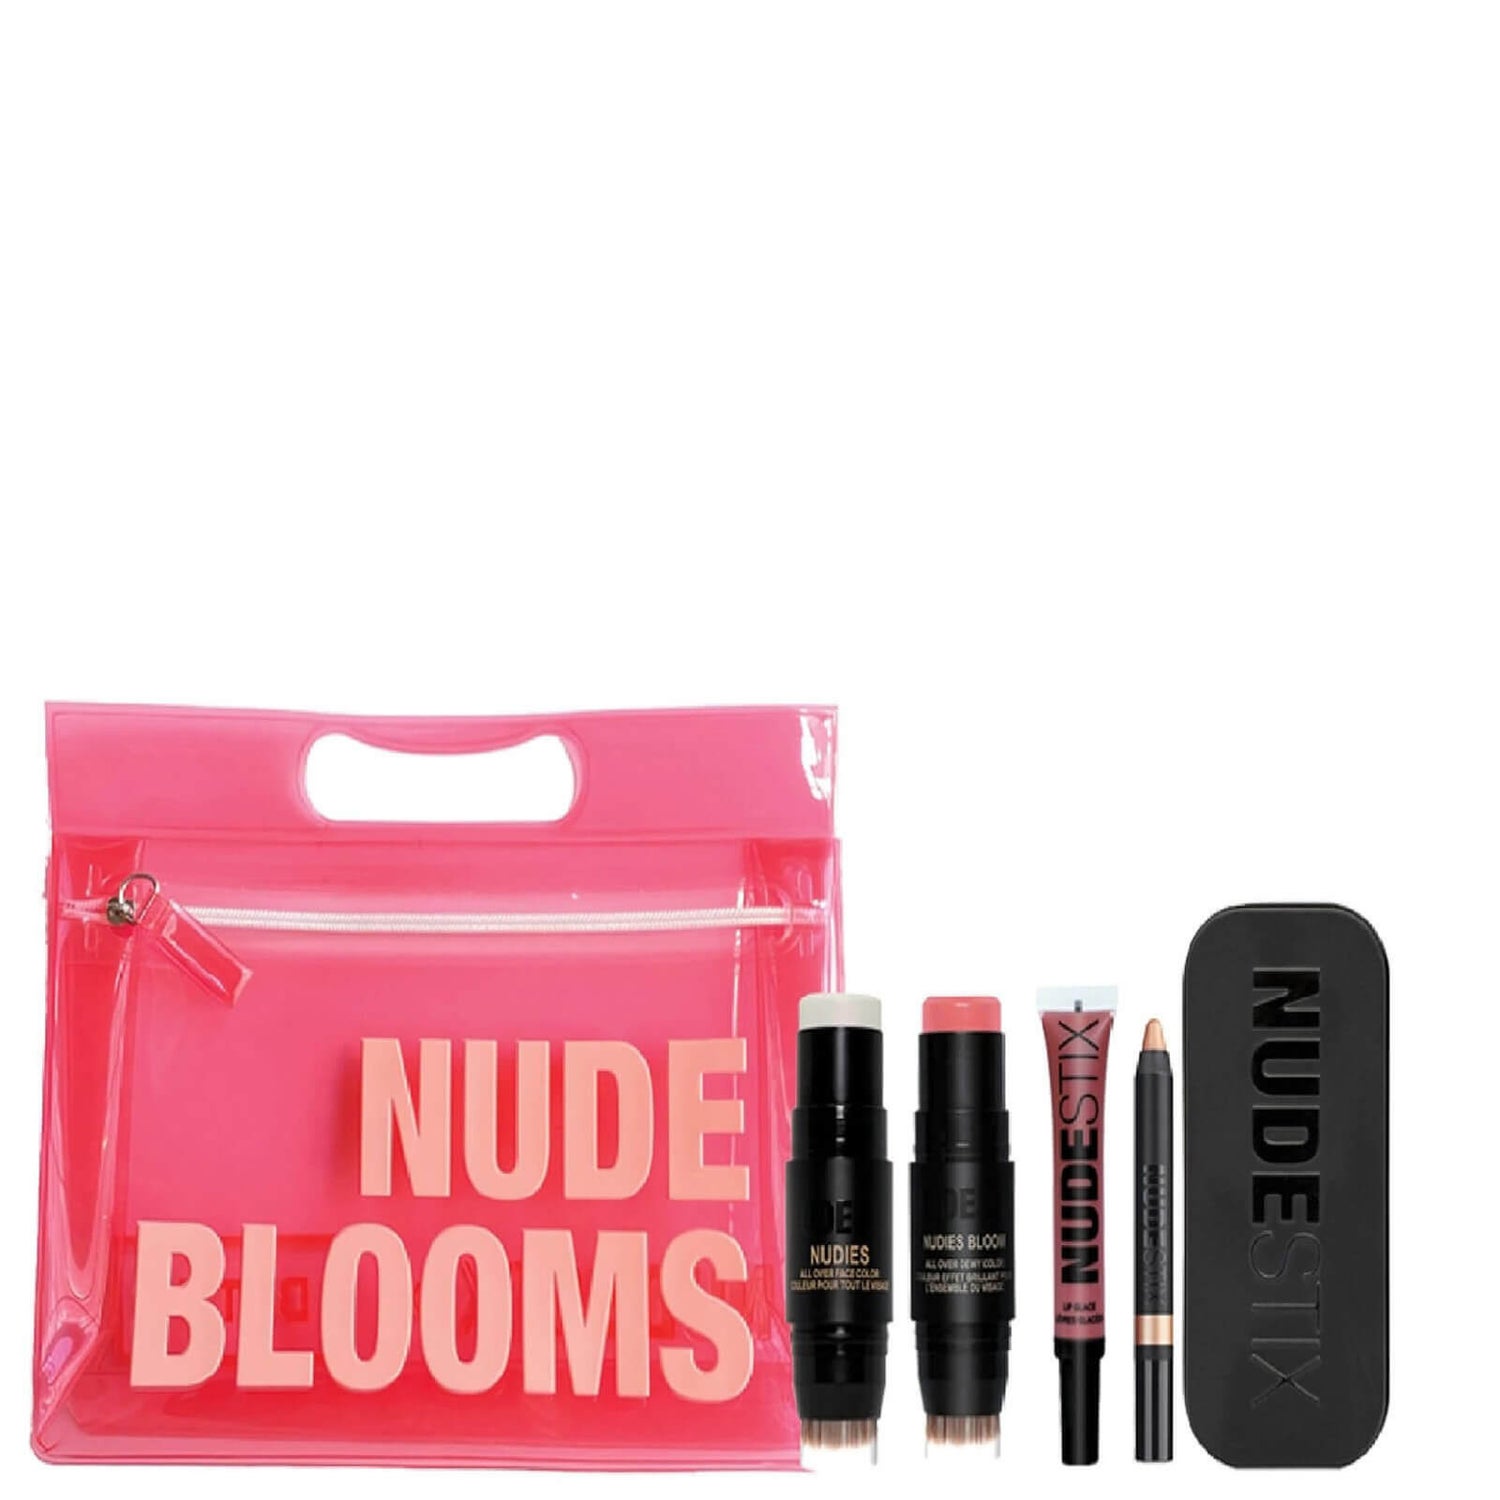 NUDESTIX Nude Blooms by Pony Park Kit